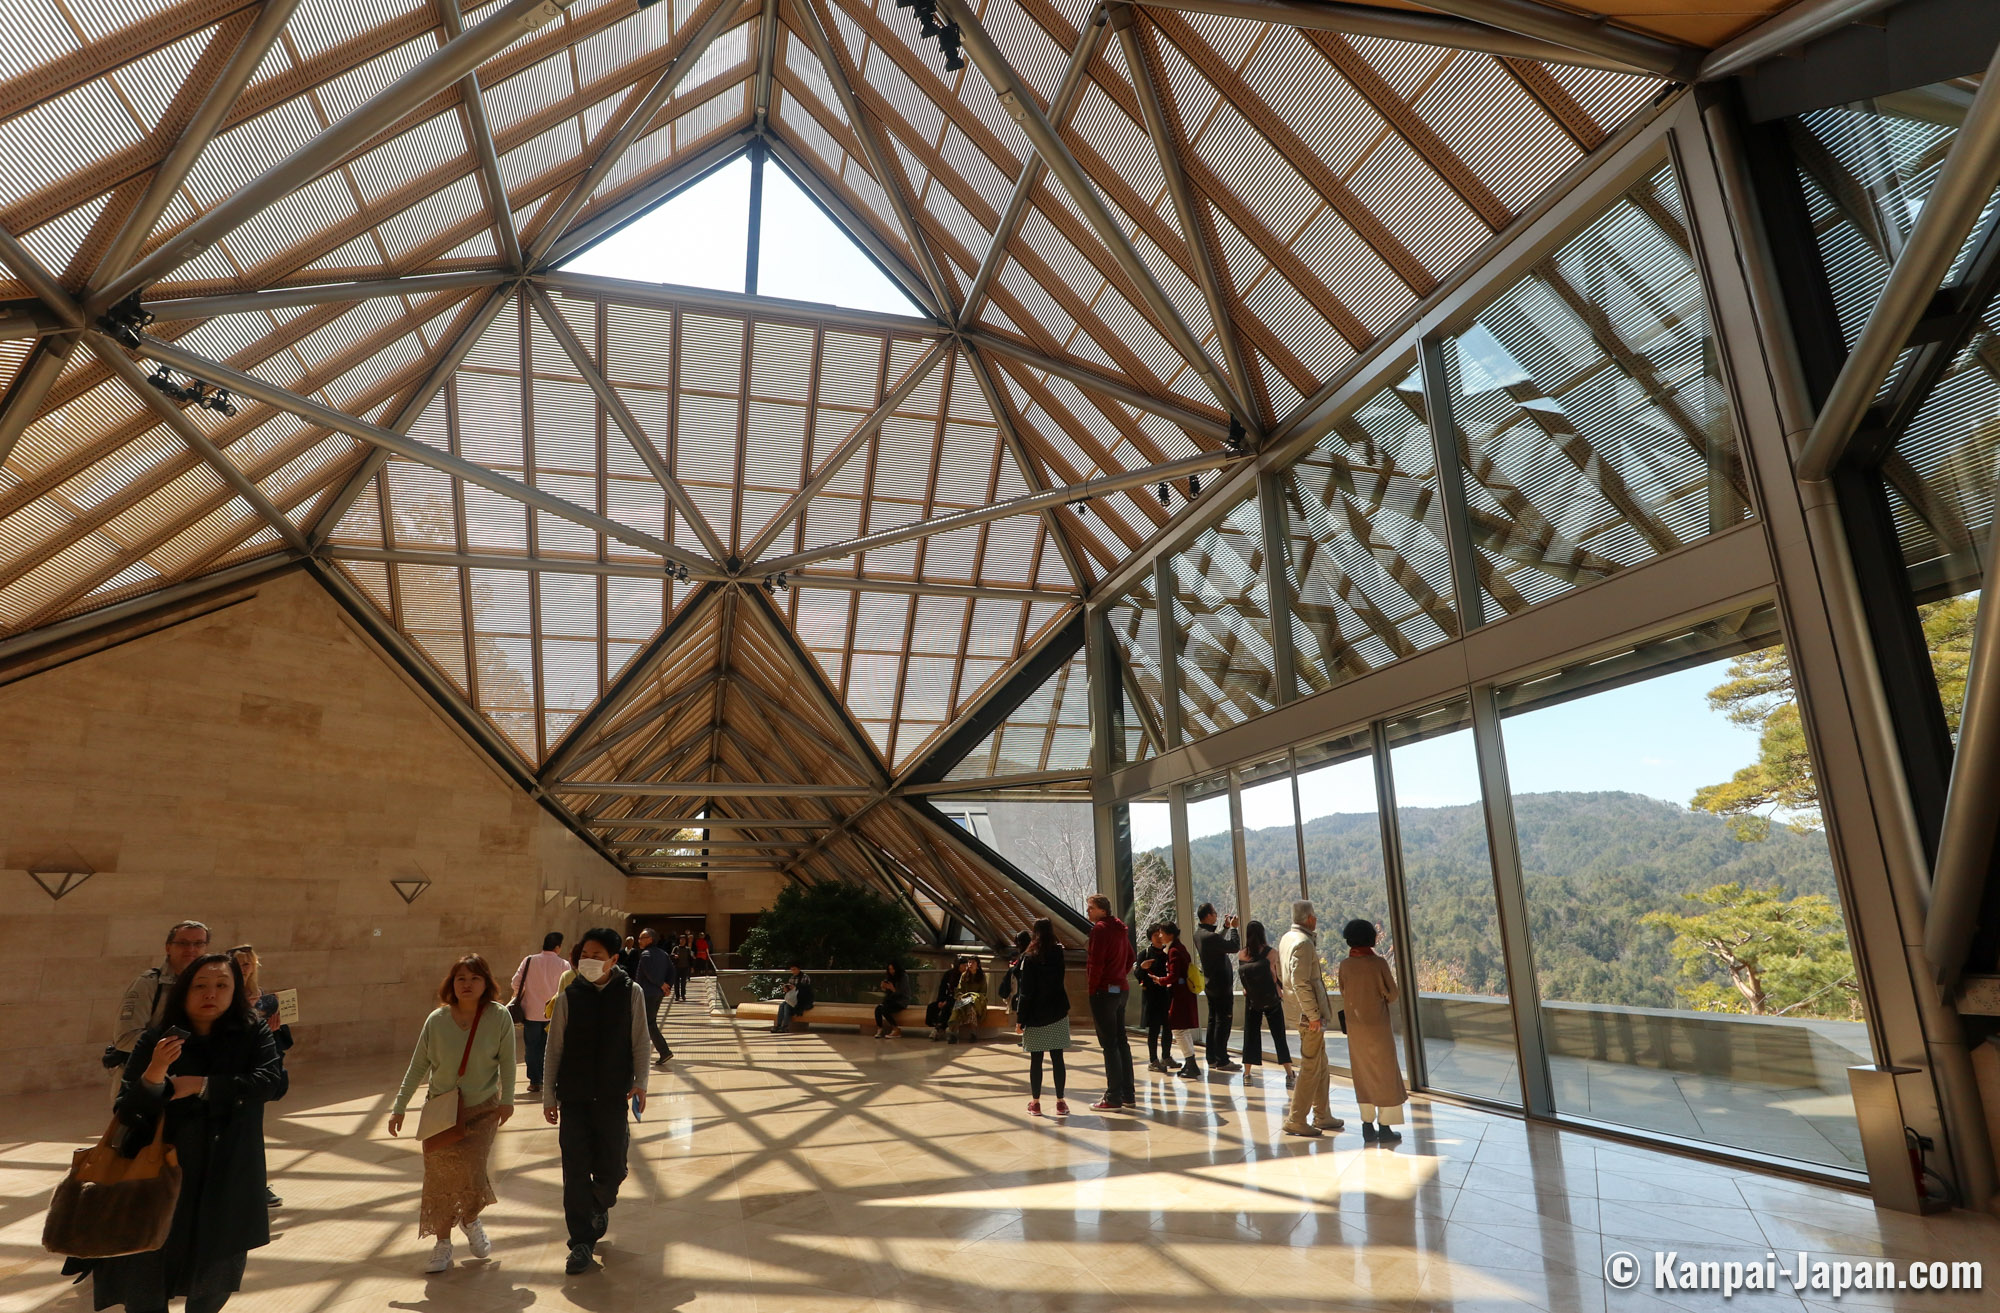 Japan's Shangri-la: I.M Pei's Miho Museum with Narration 